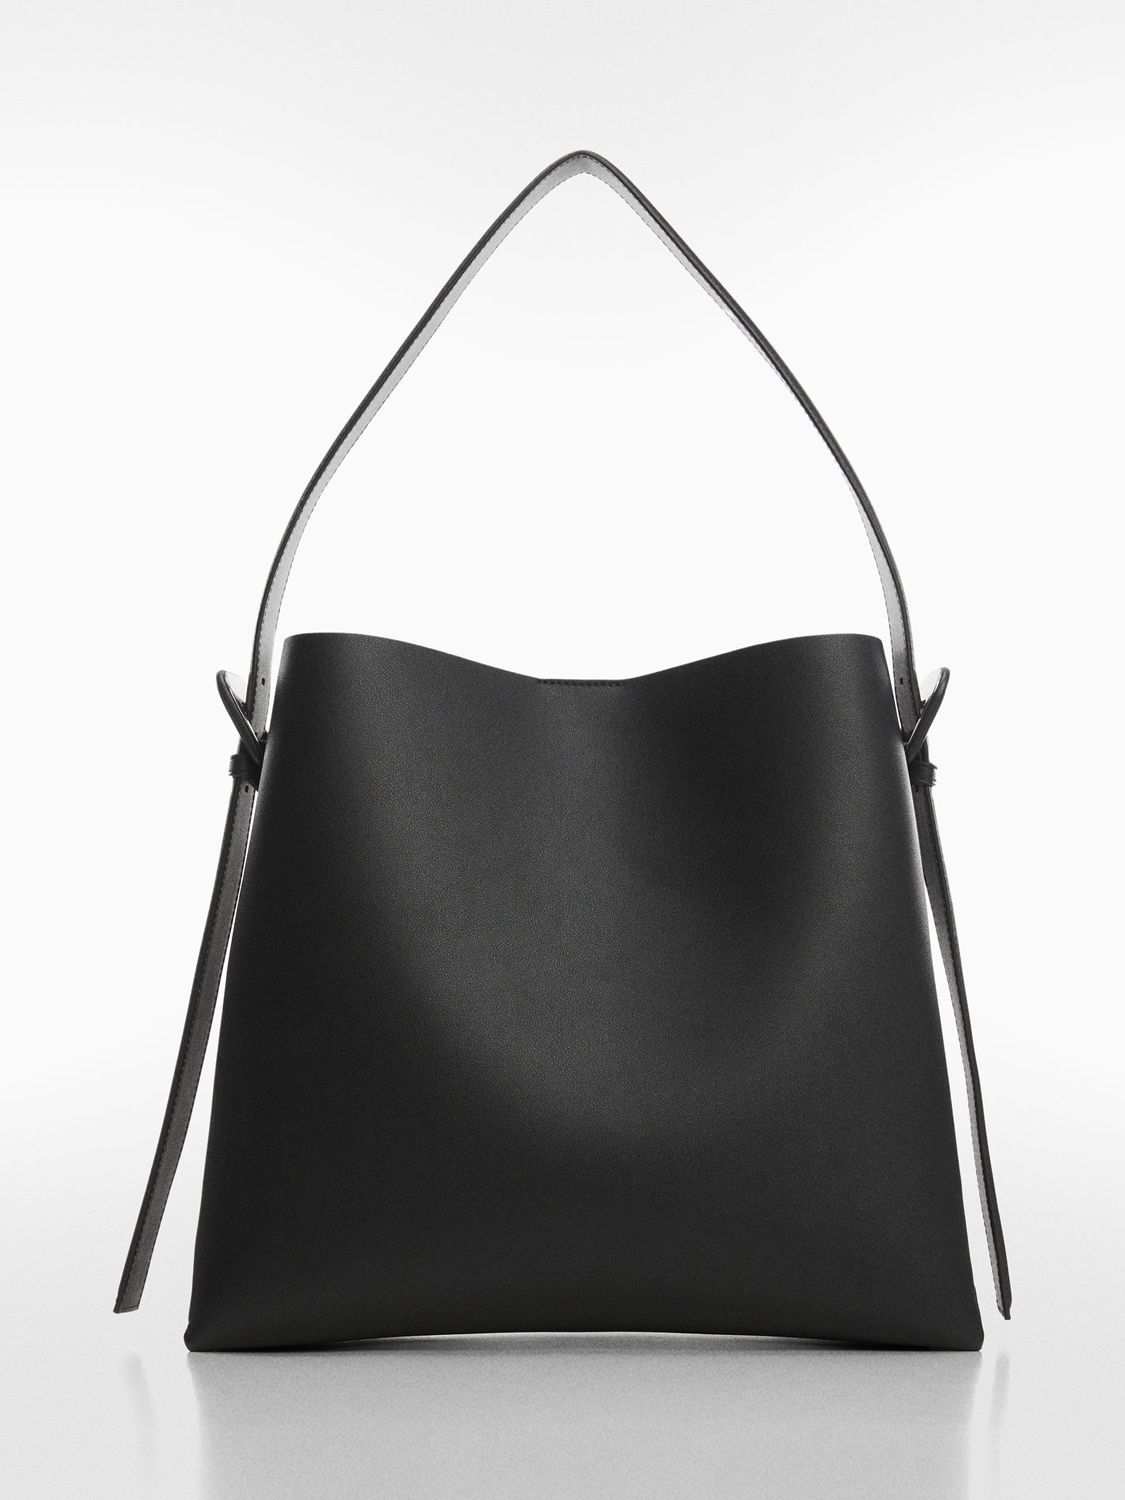 Mango Lucia Large Shoulder Bag, Black, One Size